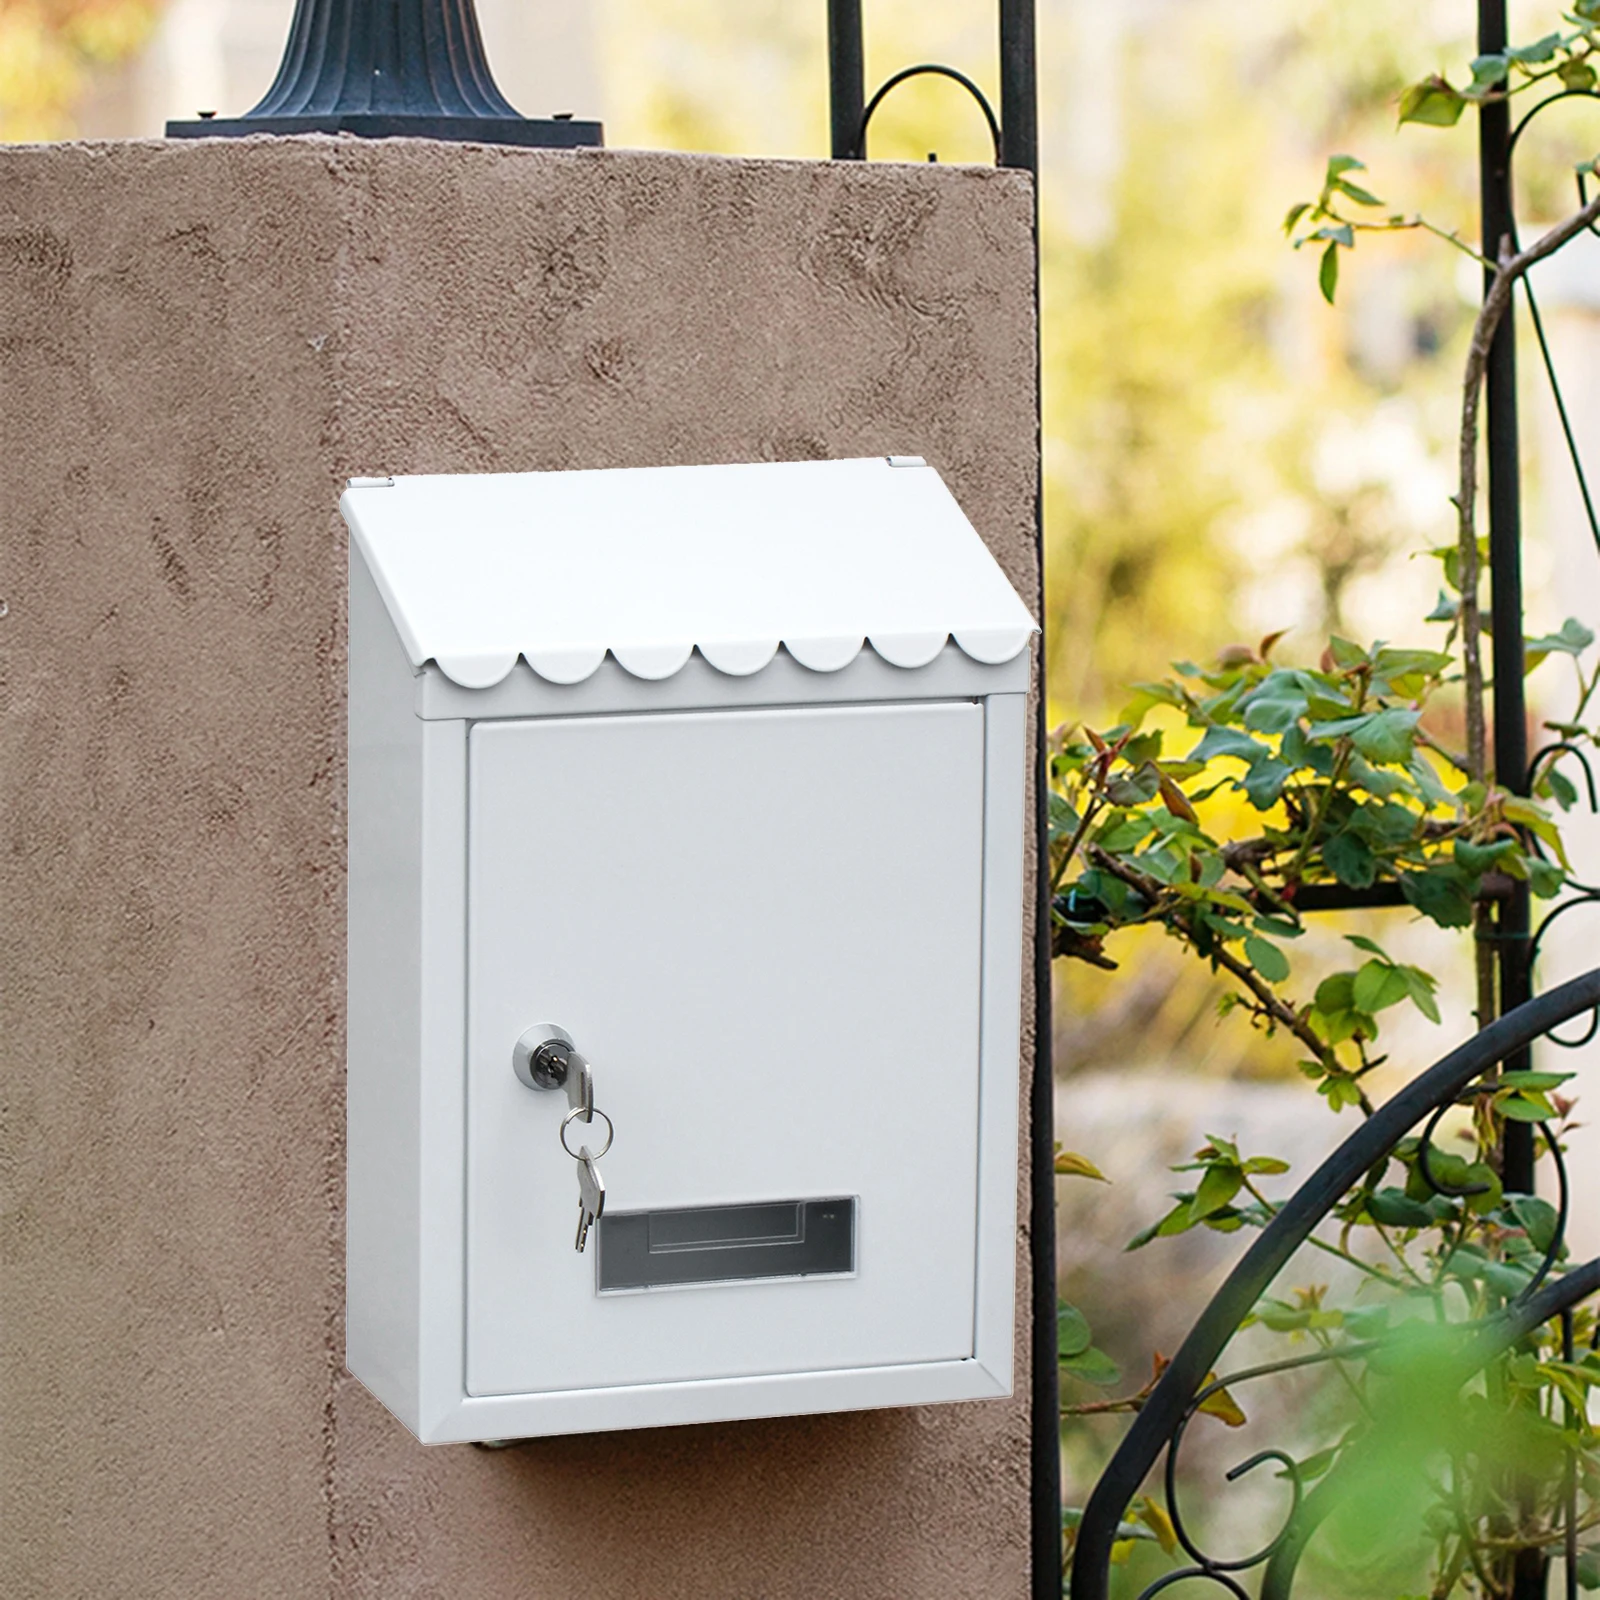 Rust-proof Mailbox Wall Mount Post Lockable Mail Box Office Drop Box Case